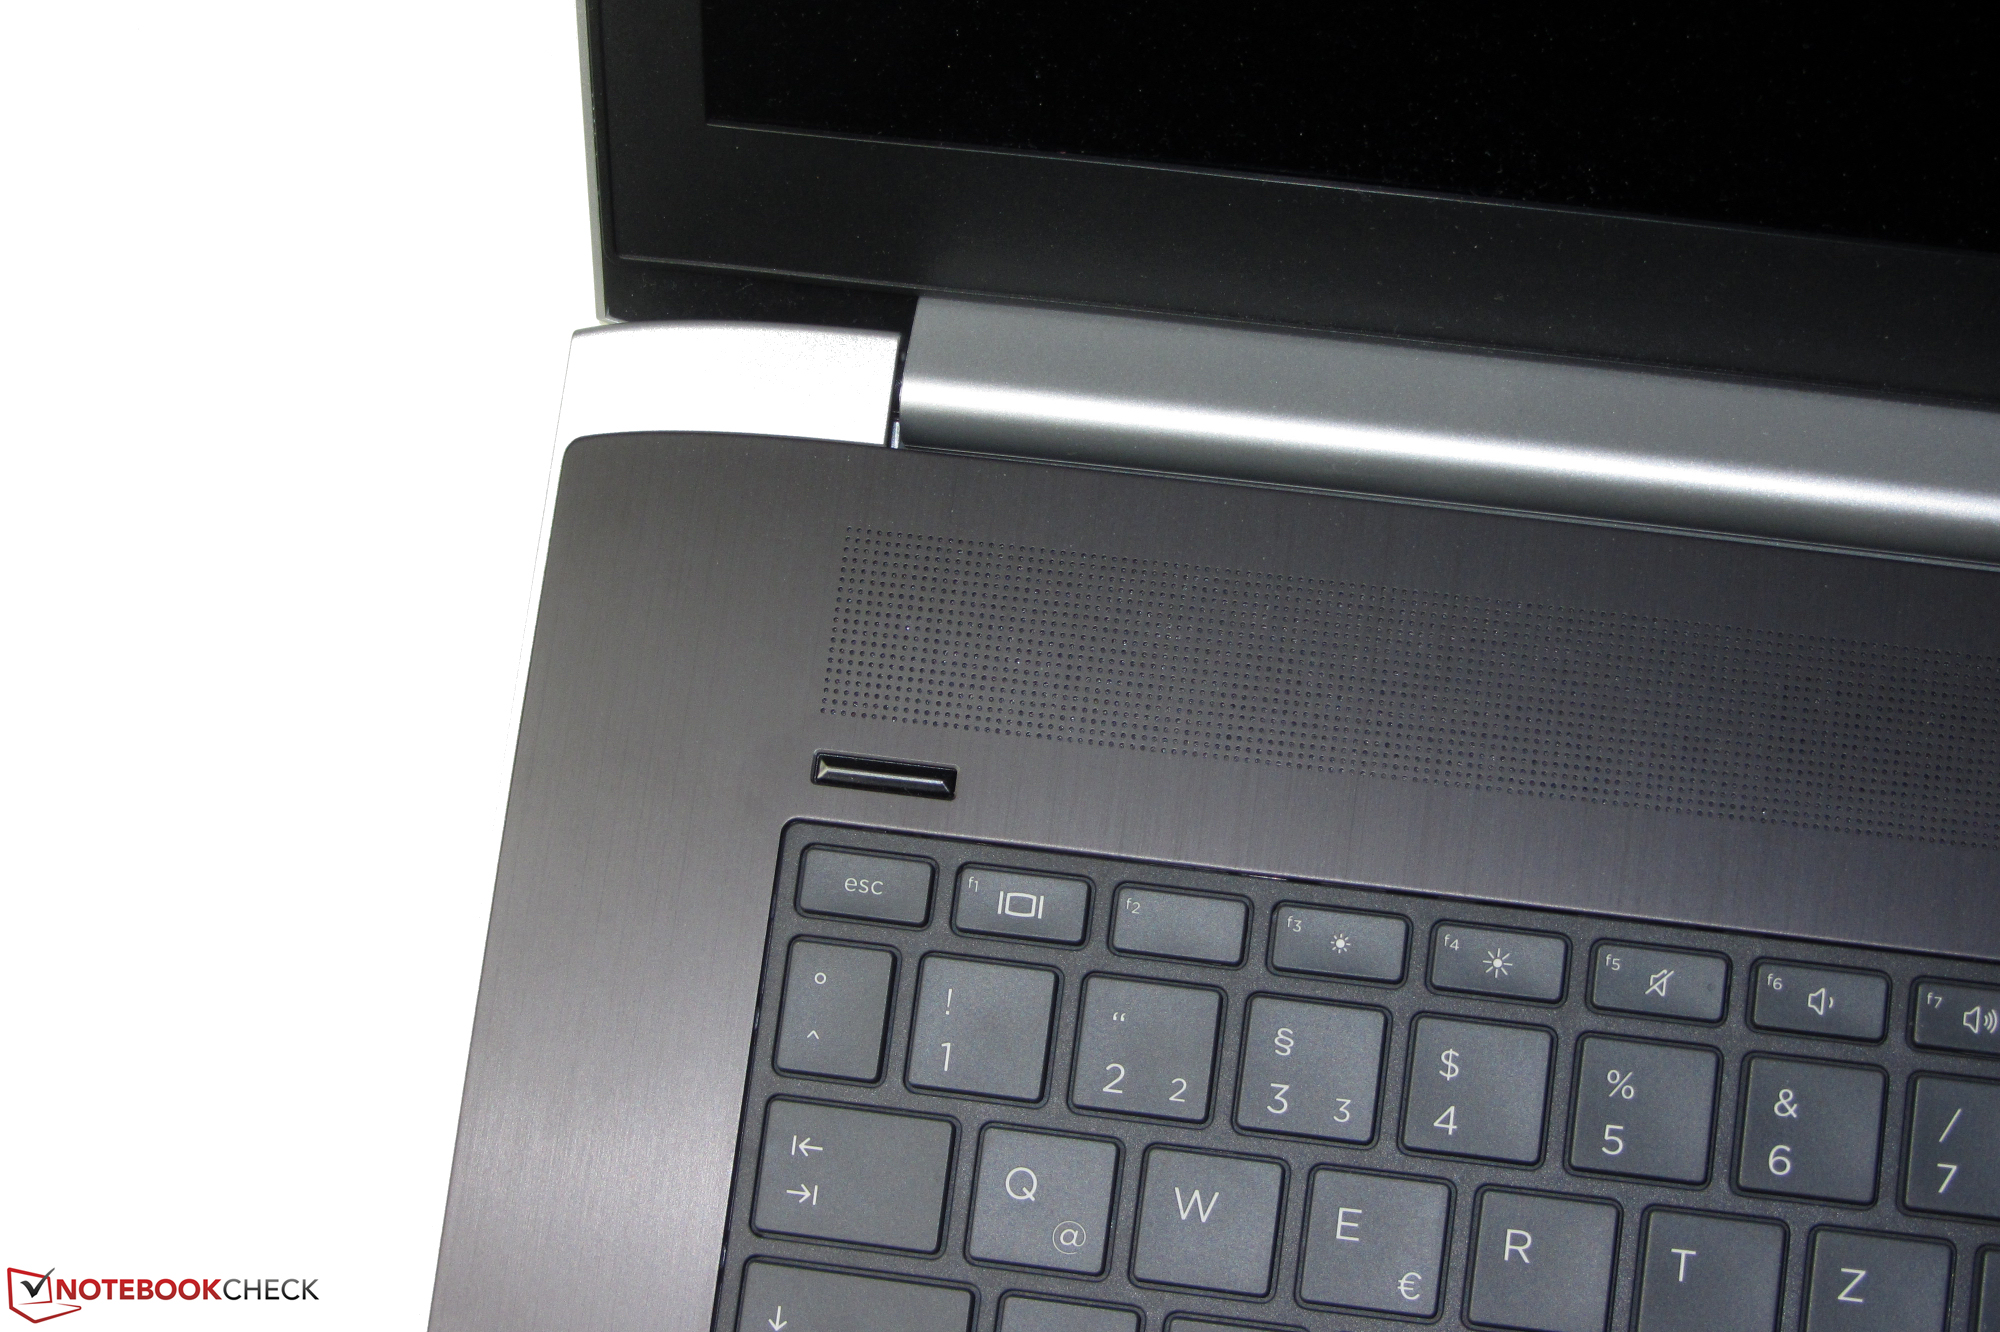 HP ProBook 470 G5 (i5-8250U, 930MX, SSD, FHD) Laptop Review 